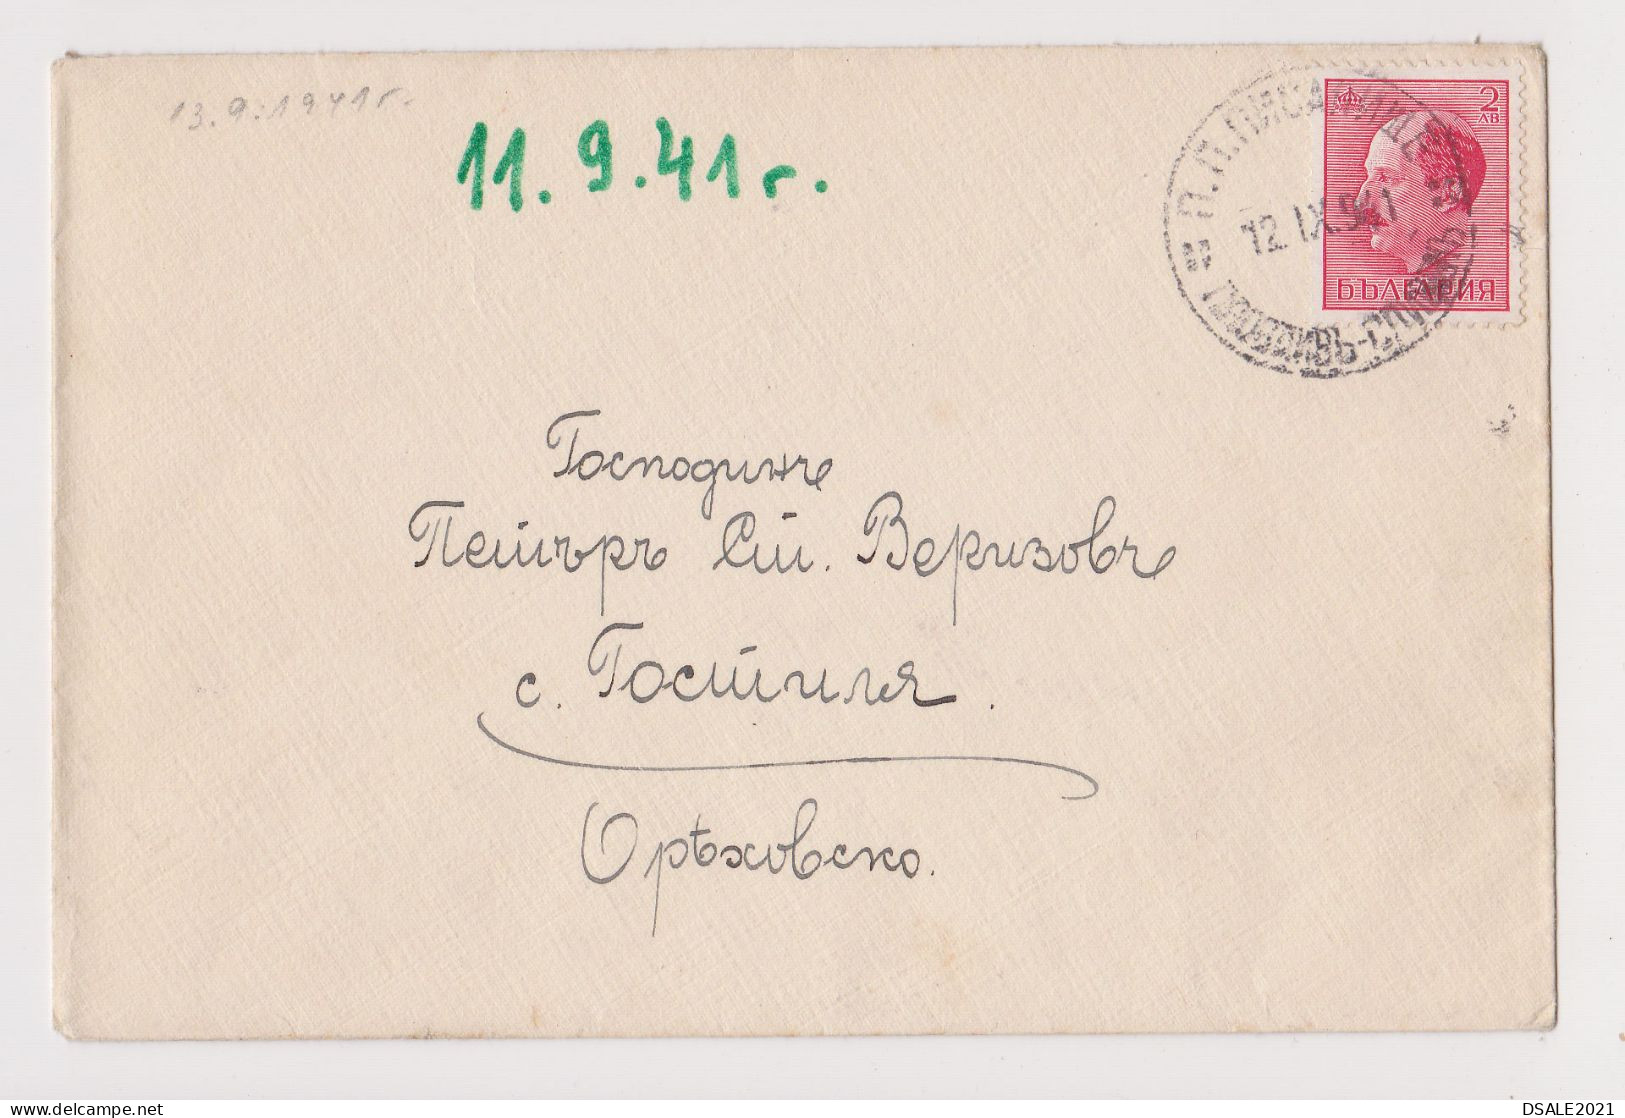 Bulgaria Bulgarie Bulgarian 1941 Cover Sent Via Railway TPO ZUG Bahnpost (PLOVDIV-SLIVEN) To Rural Gostilia (981) - Covers & Documents